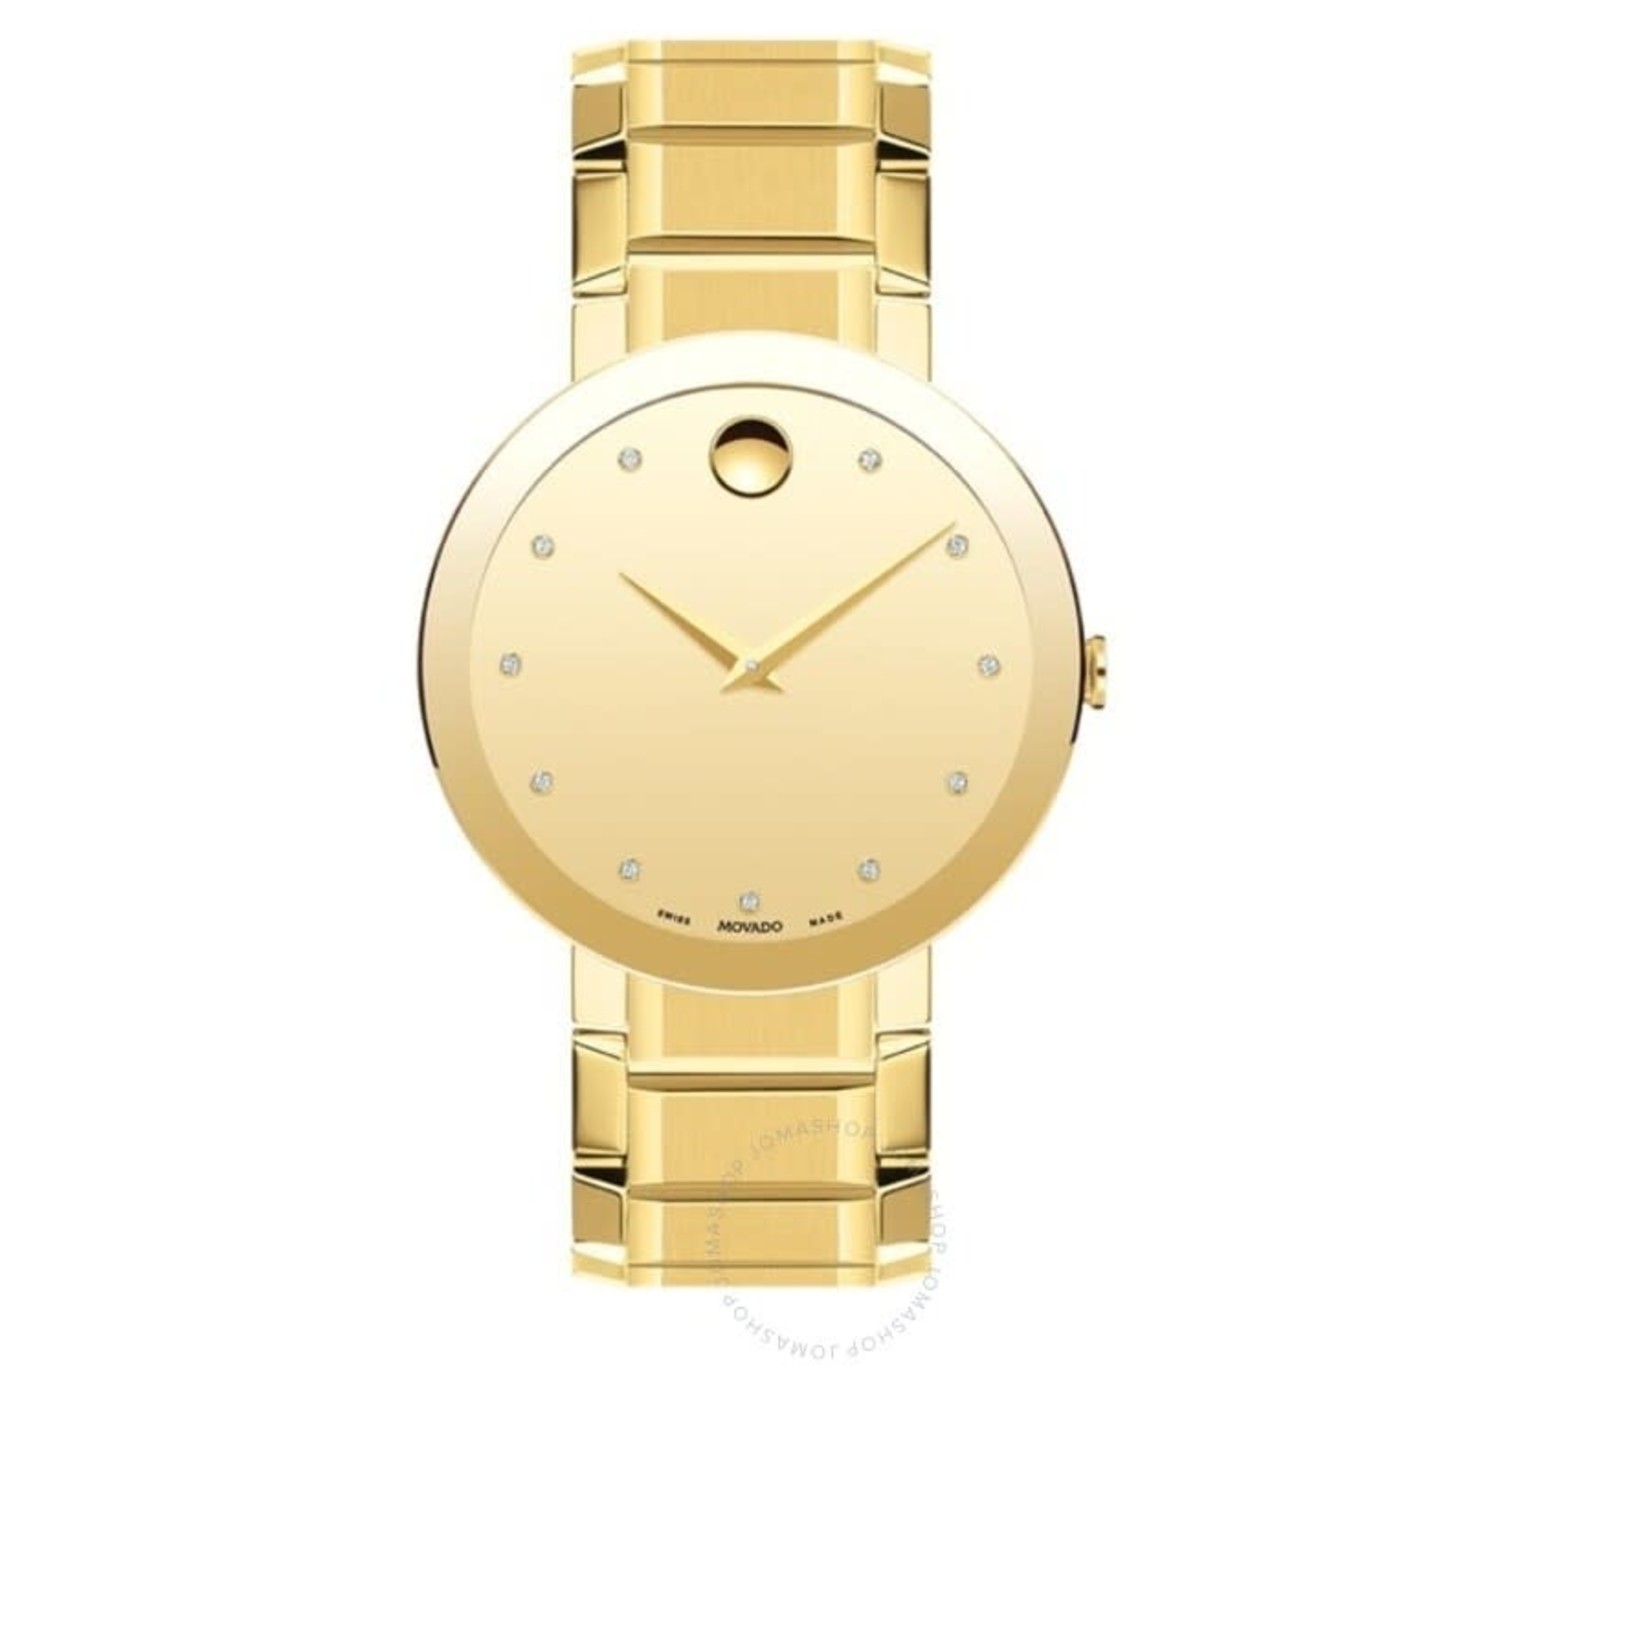 MOVADO Ladies Quartz Diamond Champagne Dial Watch 11.3.36.1300 *Grade A